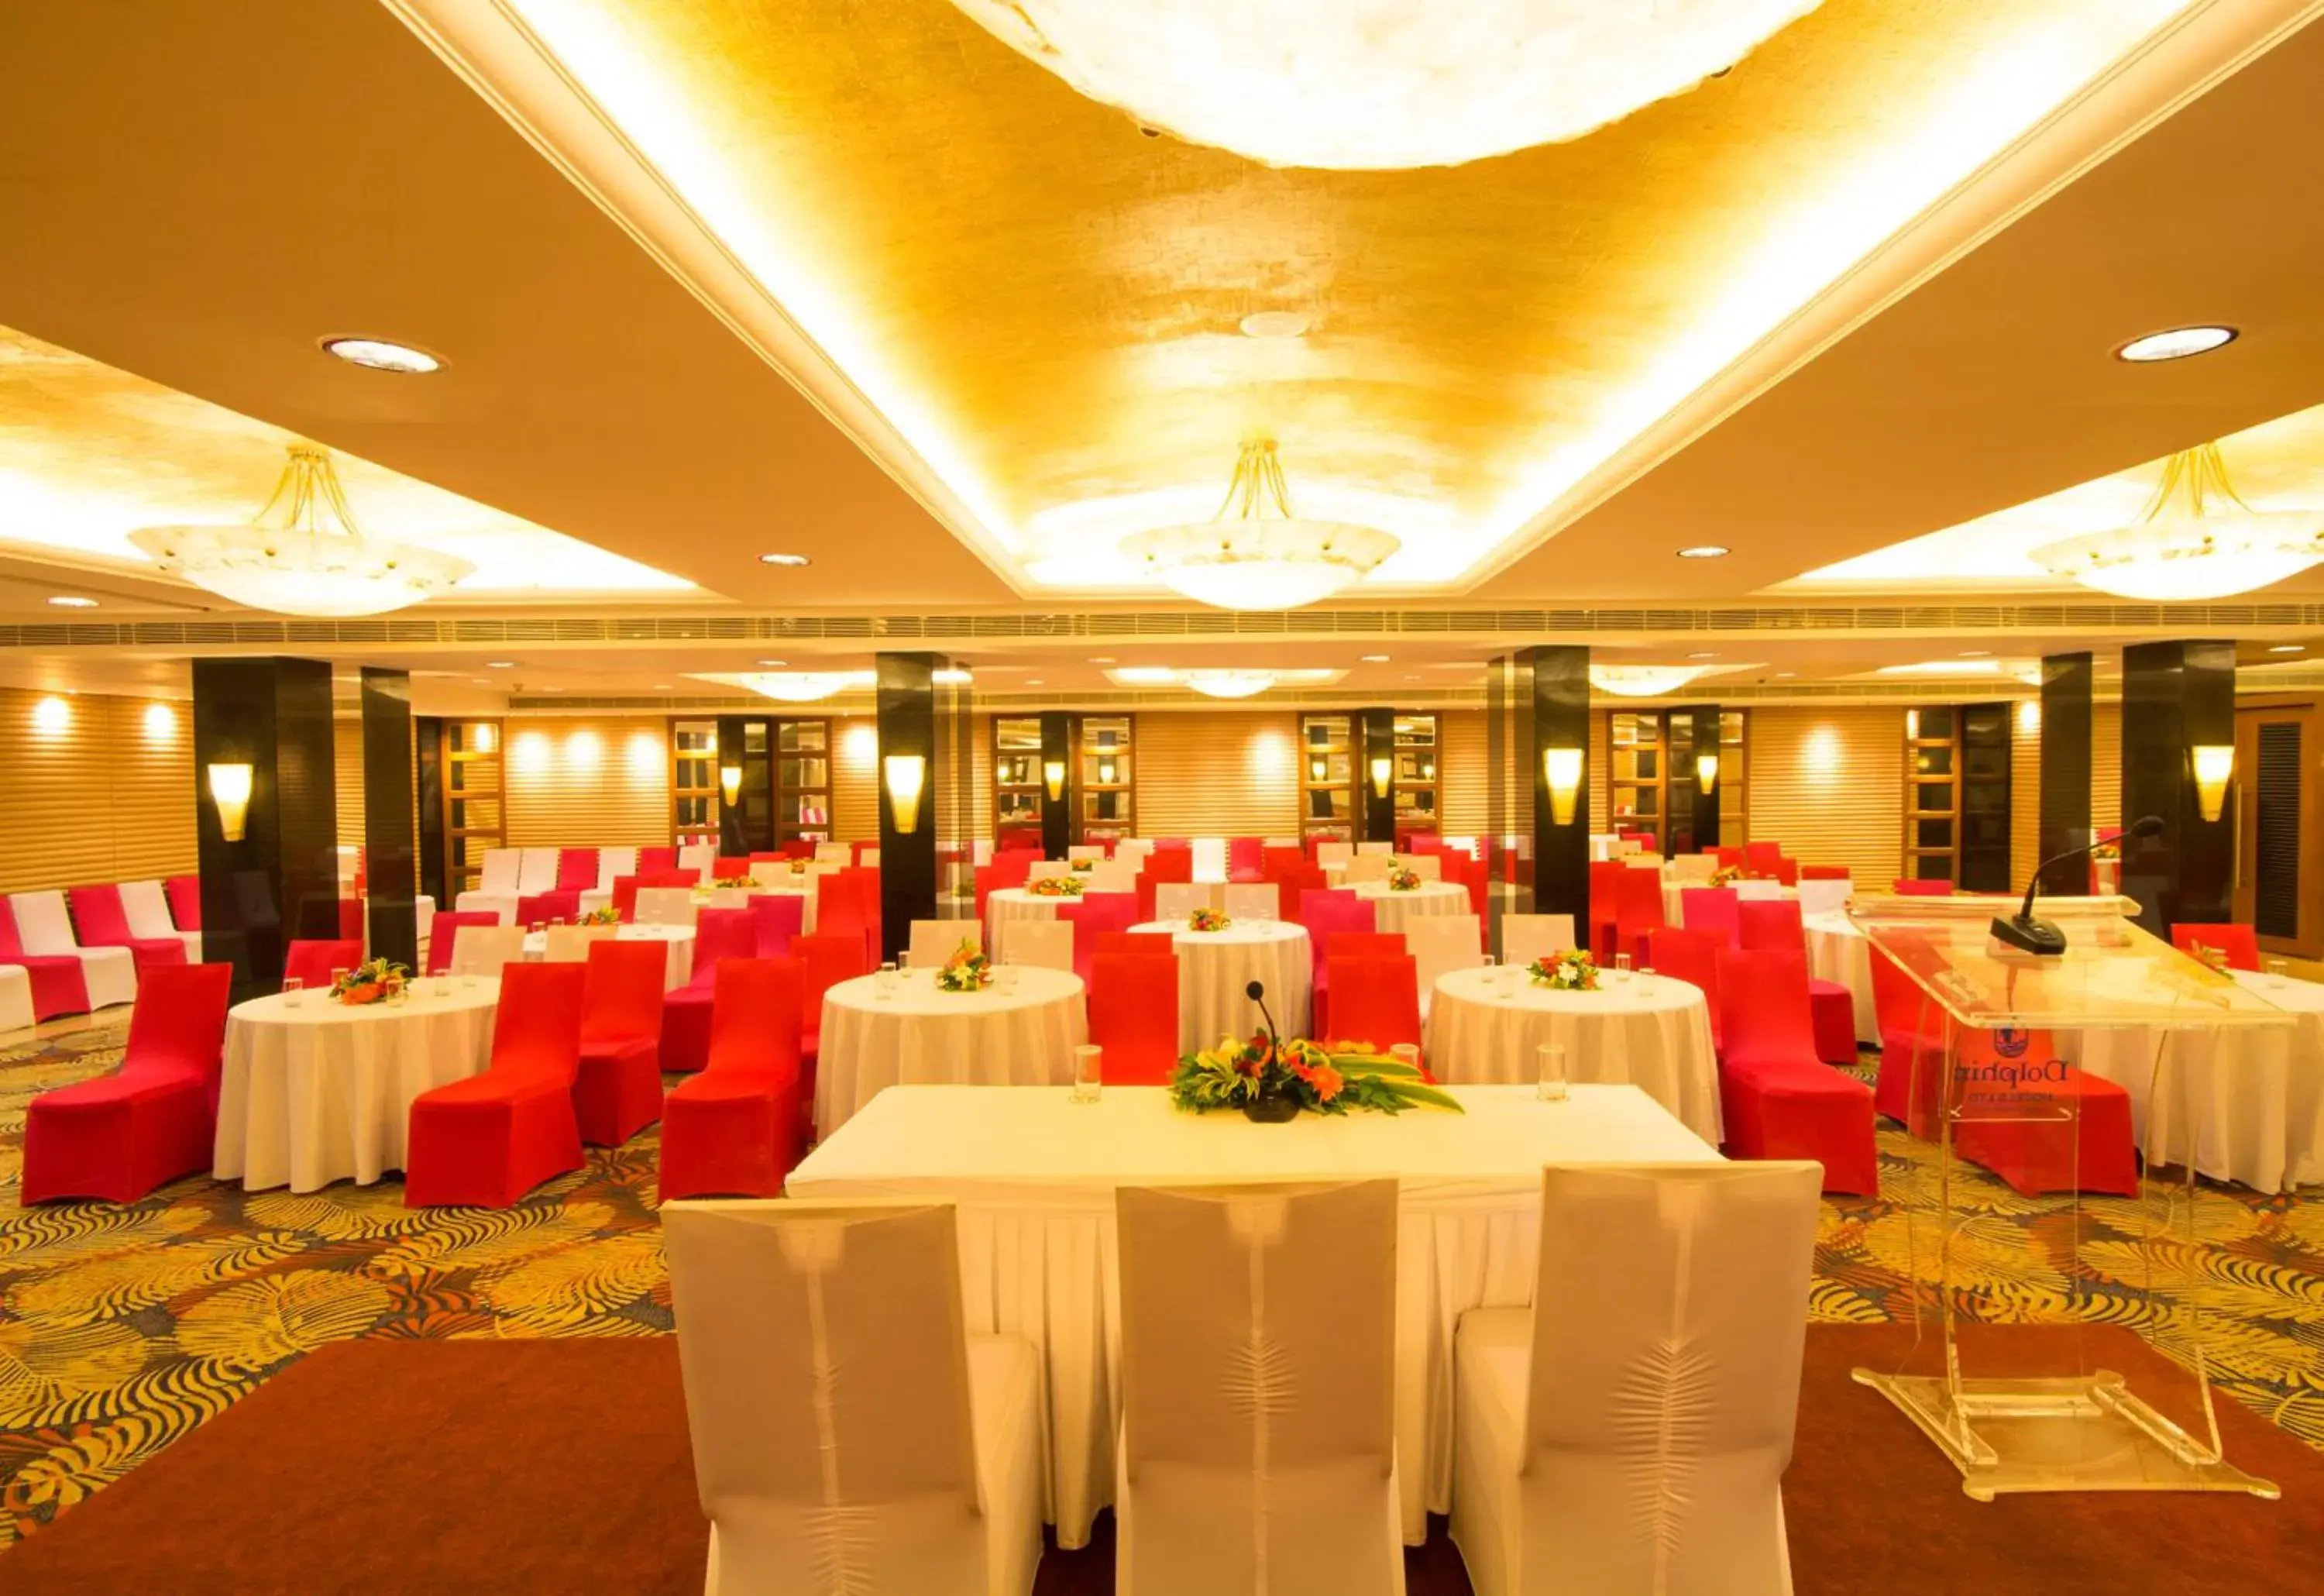 Banquet/Function facilities, Banquet Facilities in Dolphin Hotel